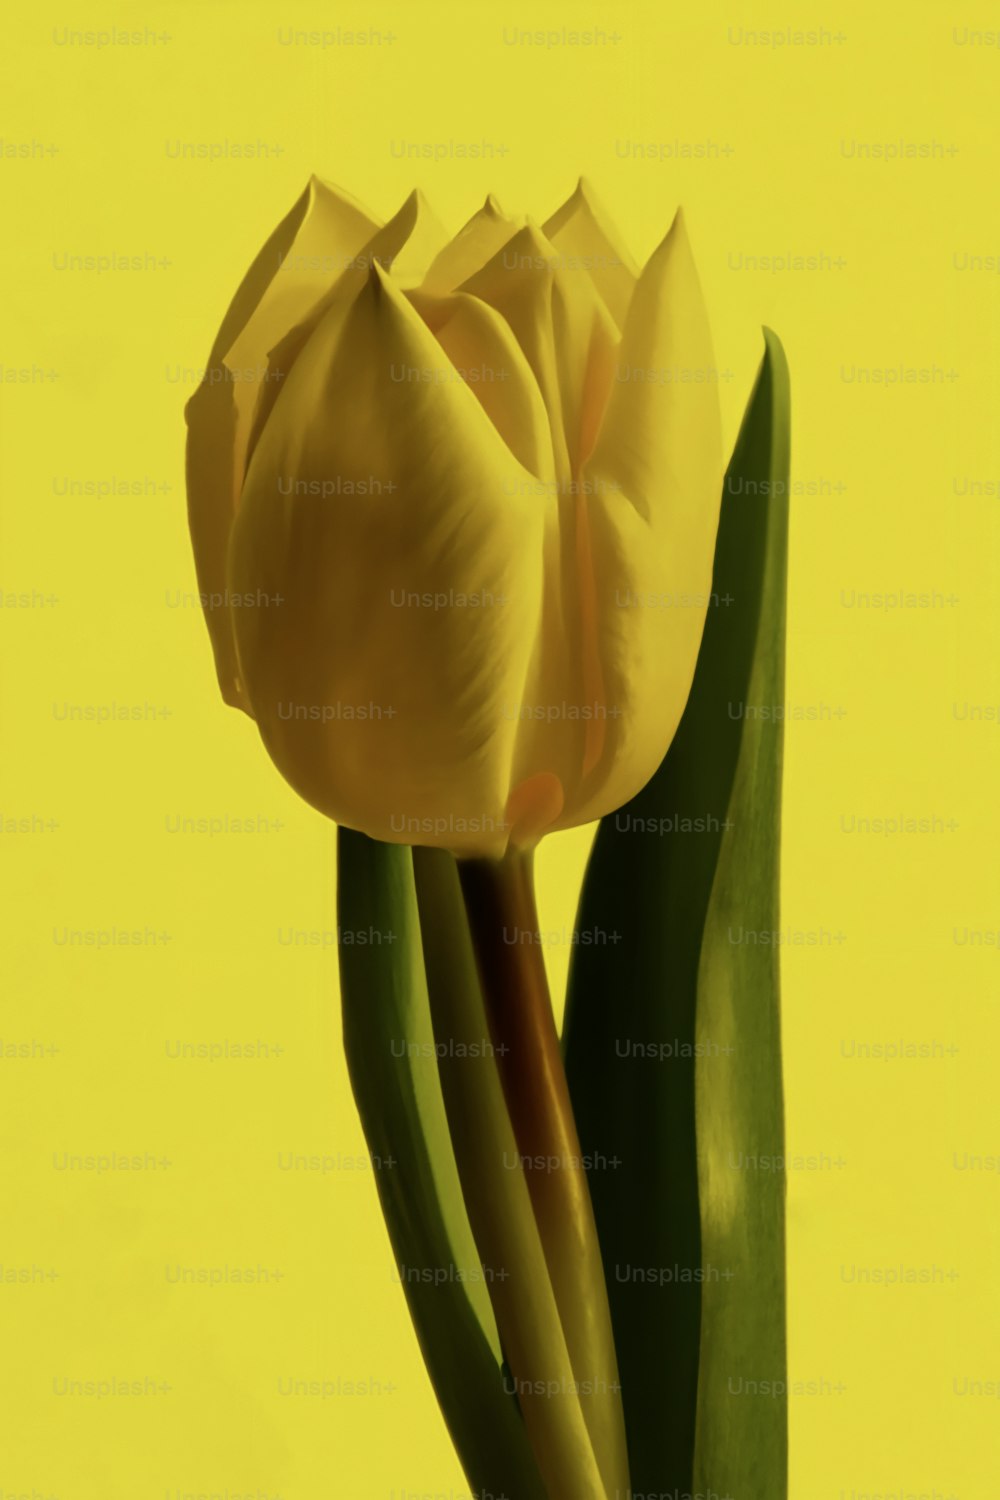 750 Yellow Tulip Pictures